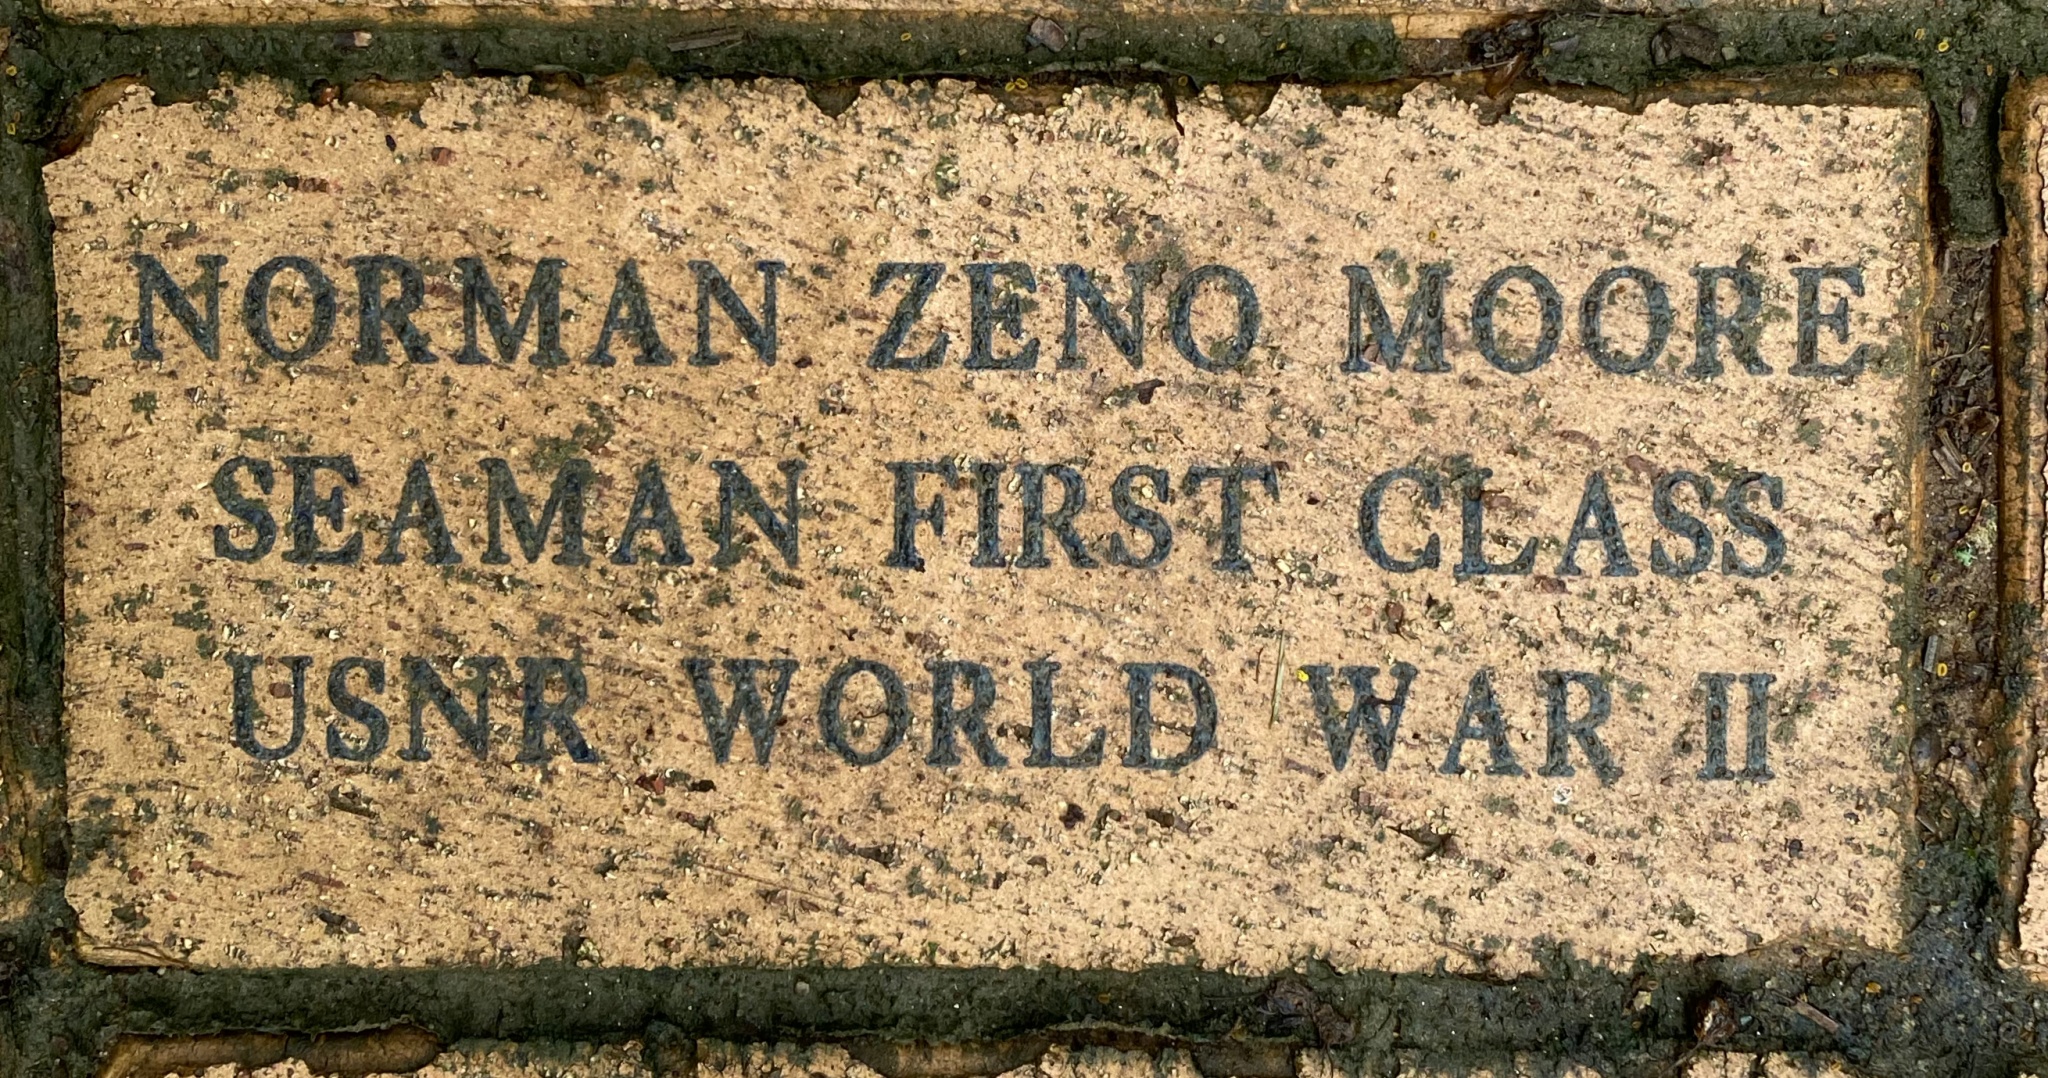 NORMAN ZENO MOORE SEAMAN FIRST CLASS USNR WORLD WAR II